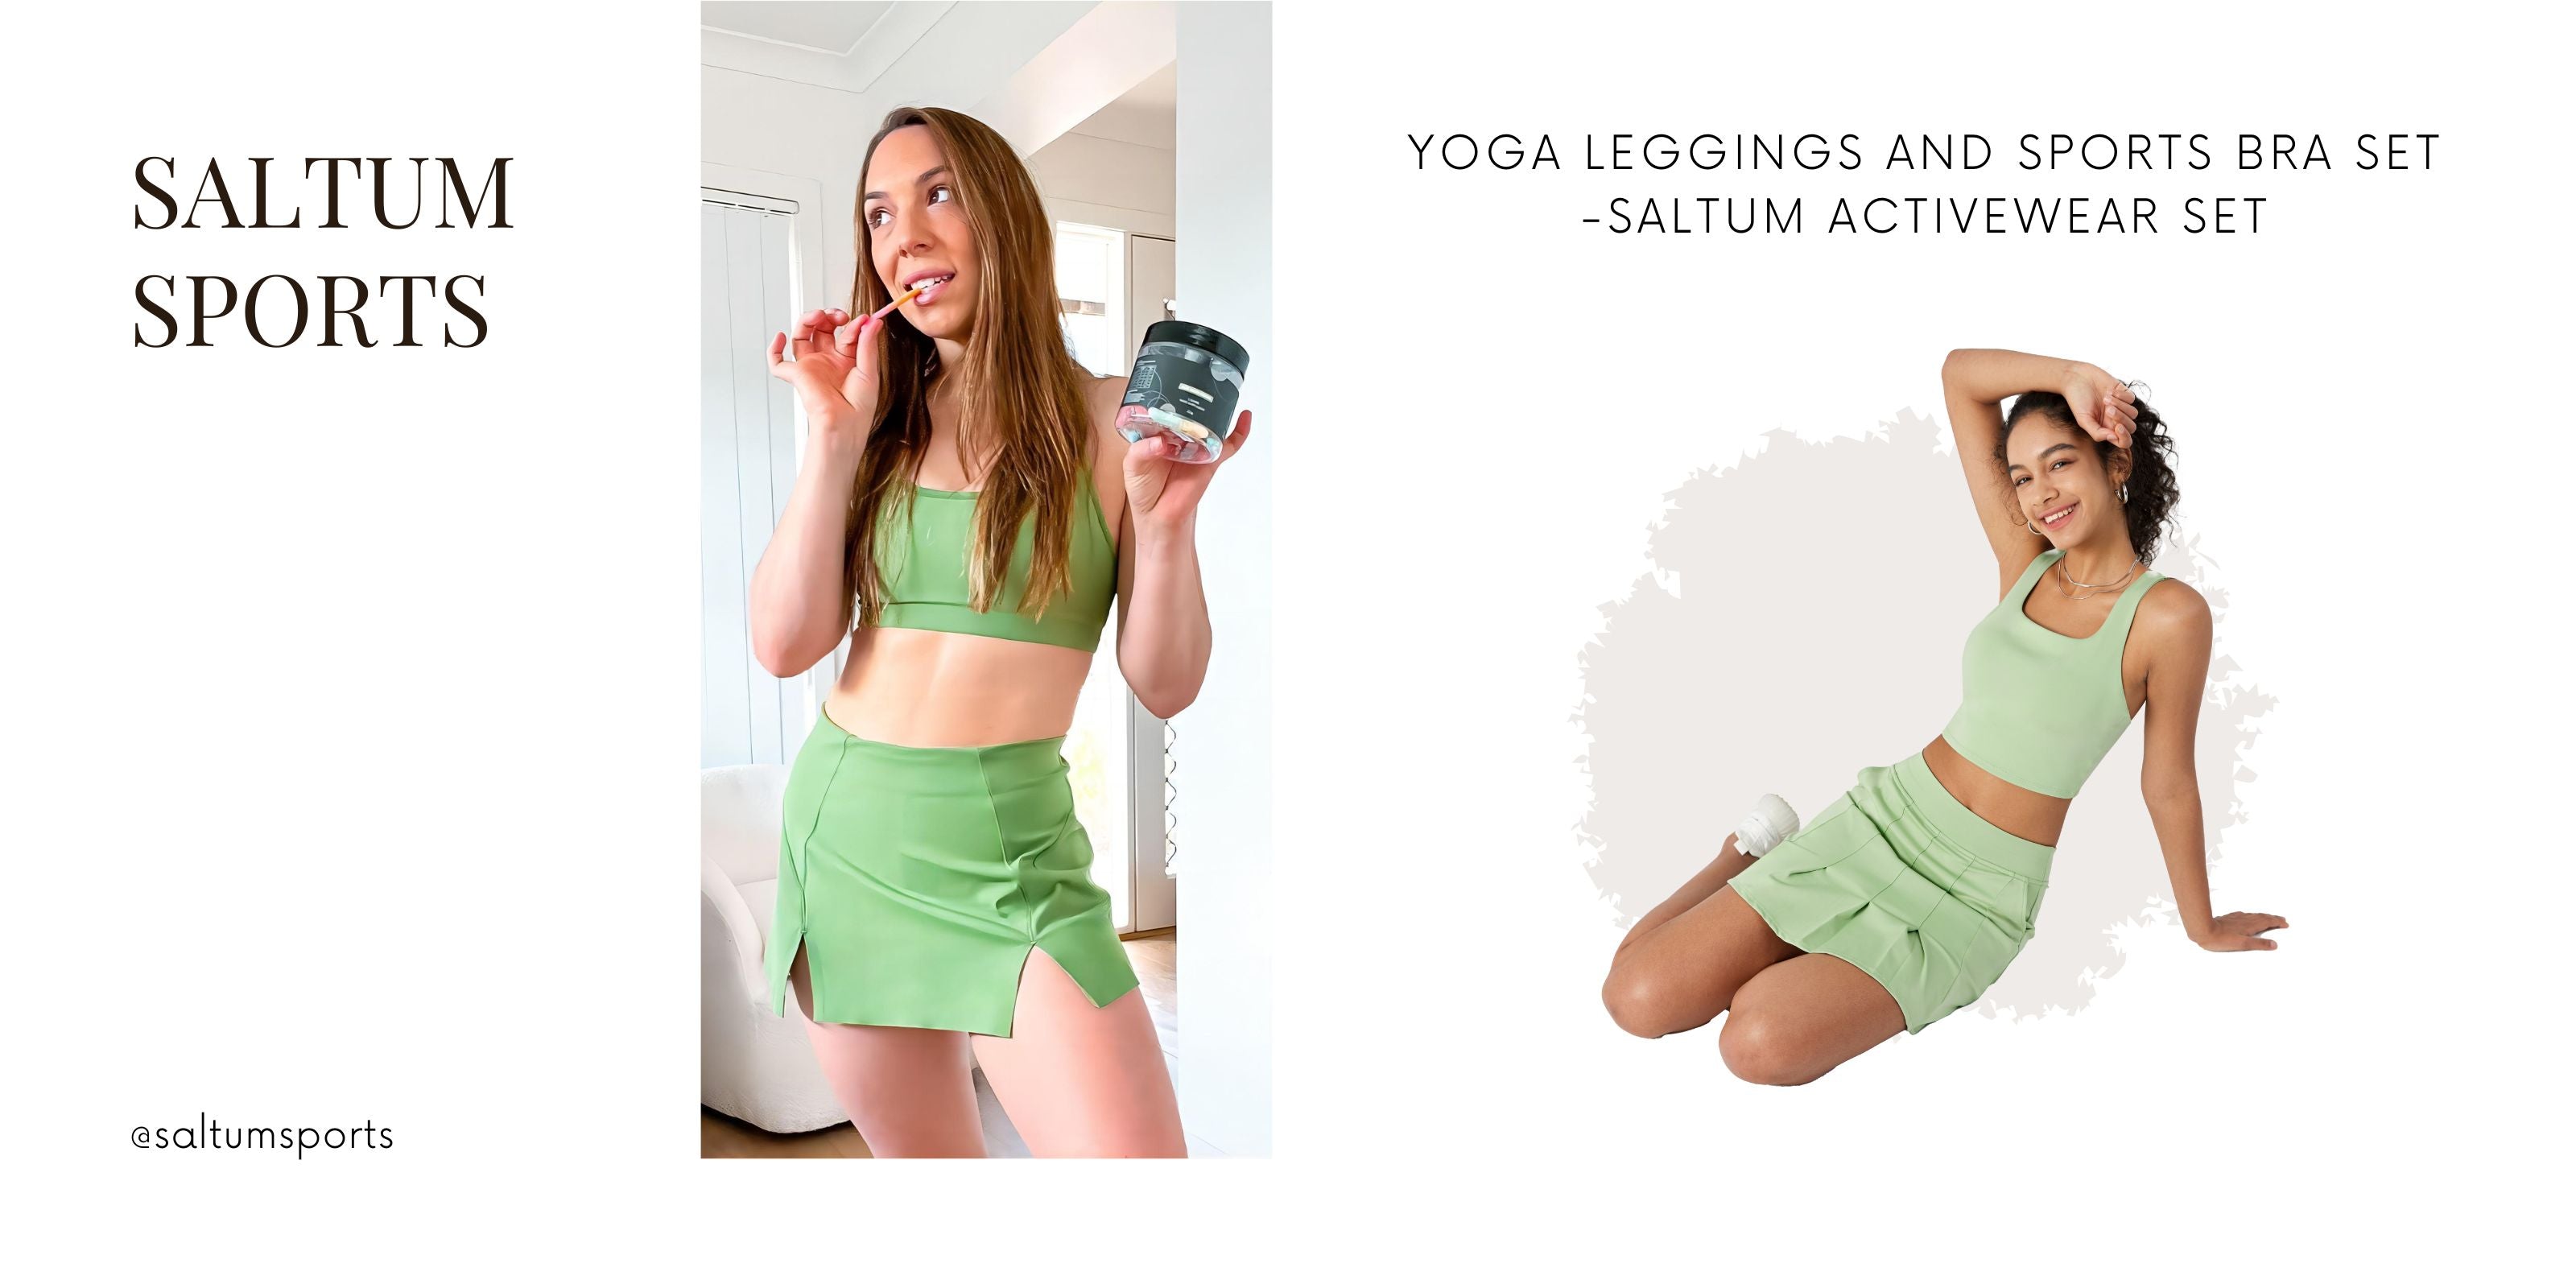 Yoga Leggings And Sports Bra Set - Saltum Activewear Set